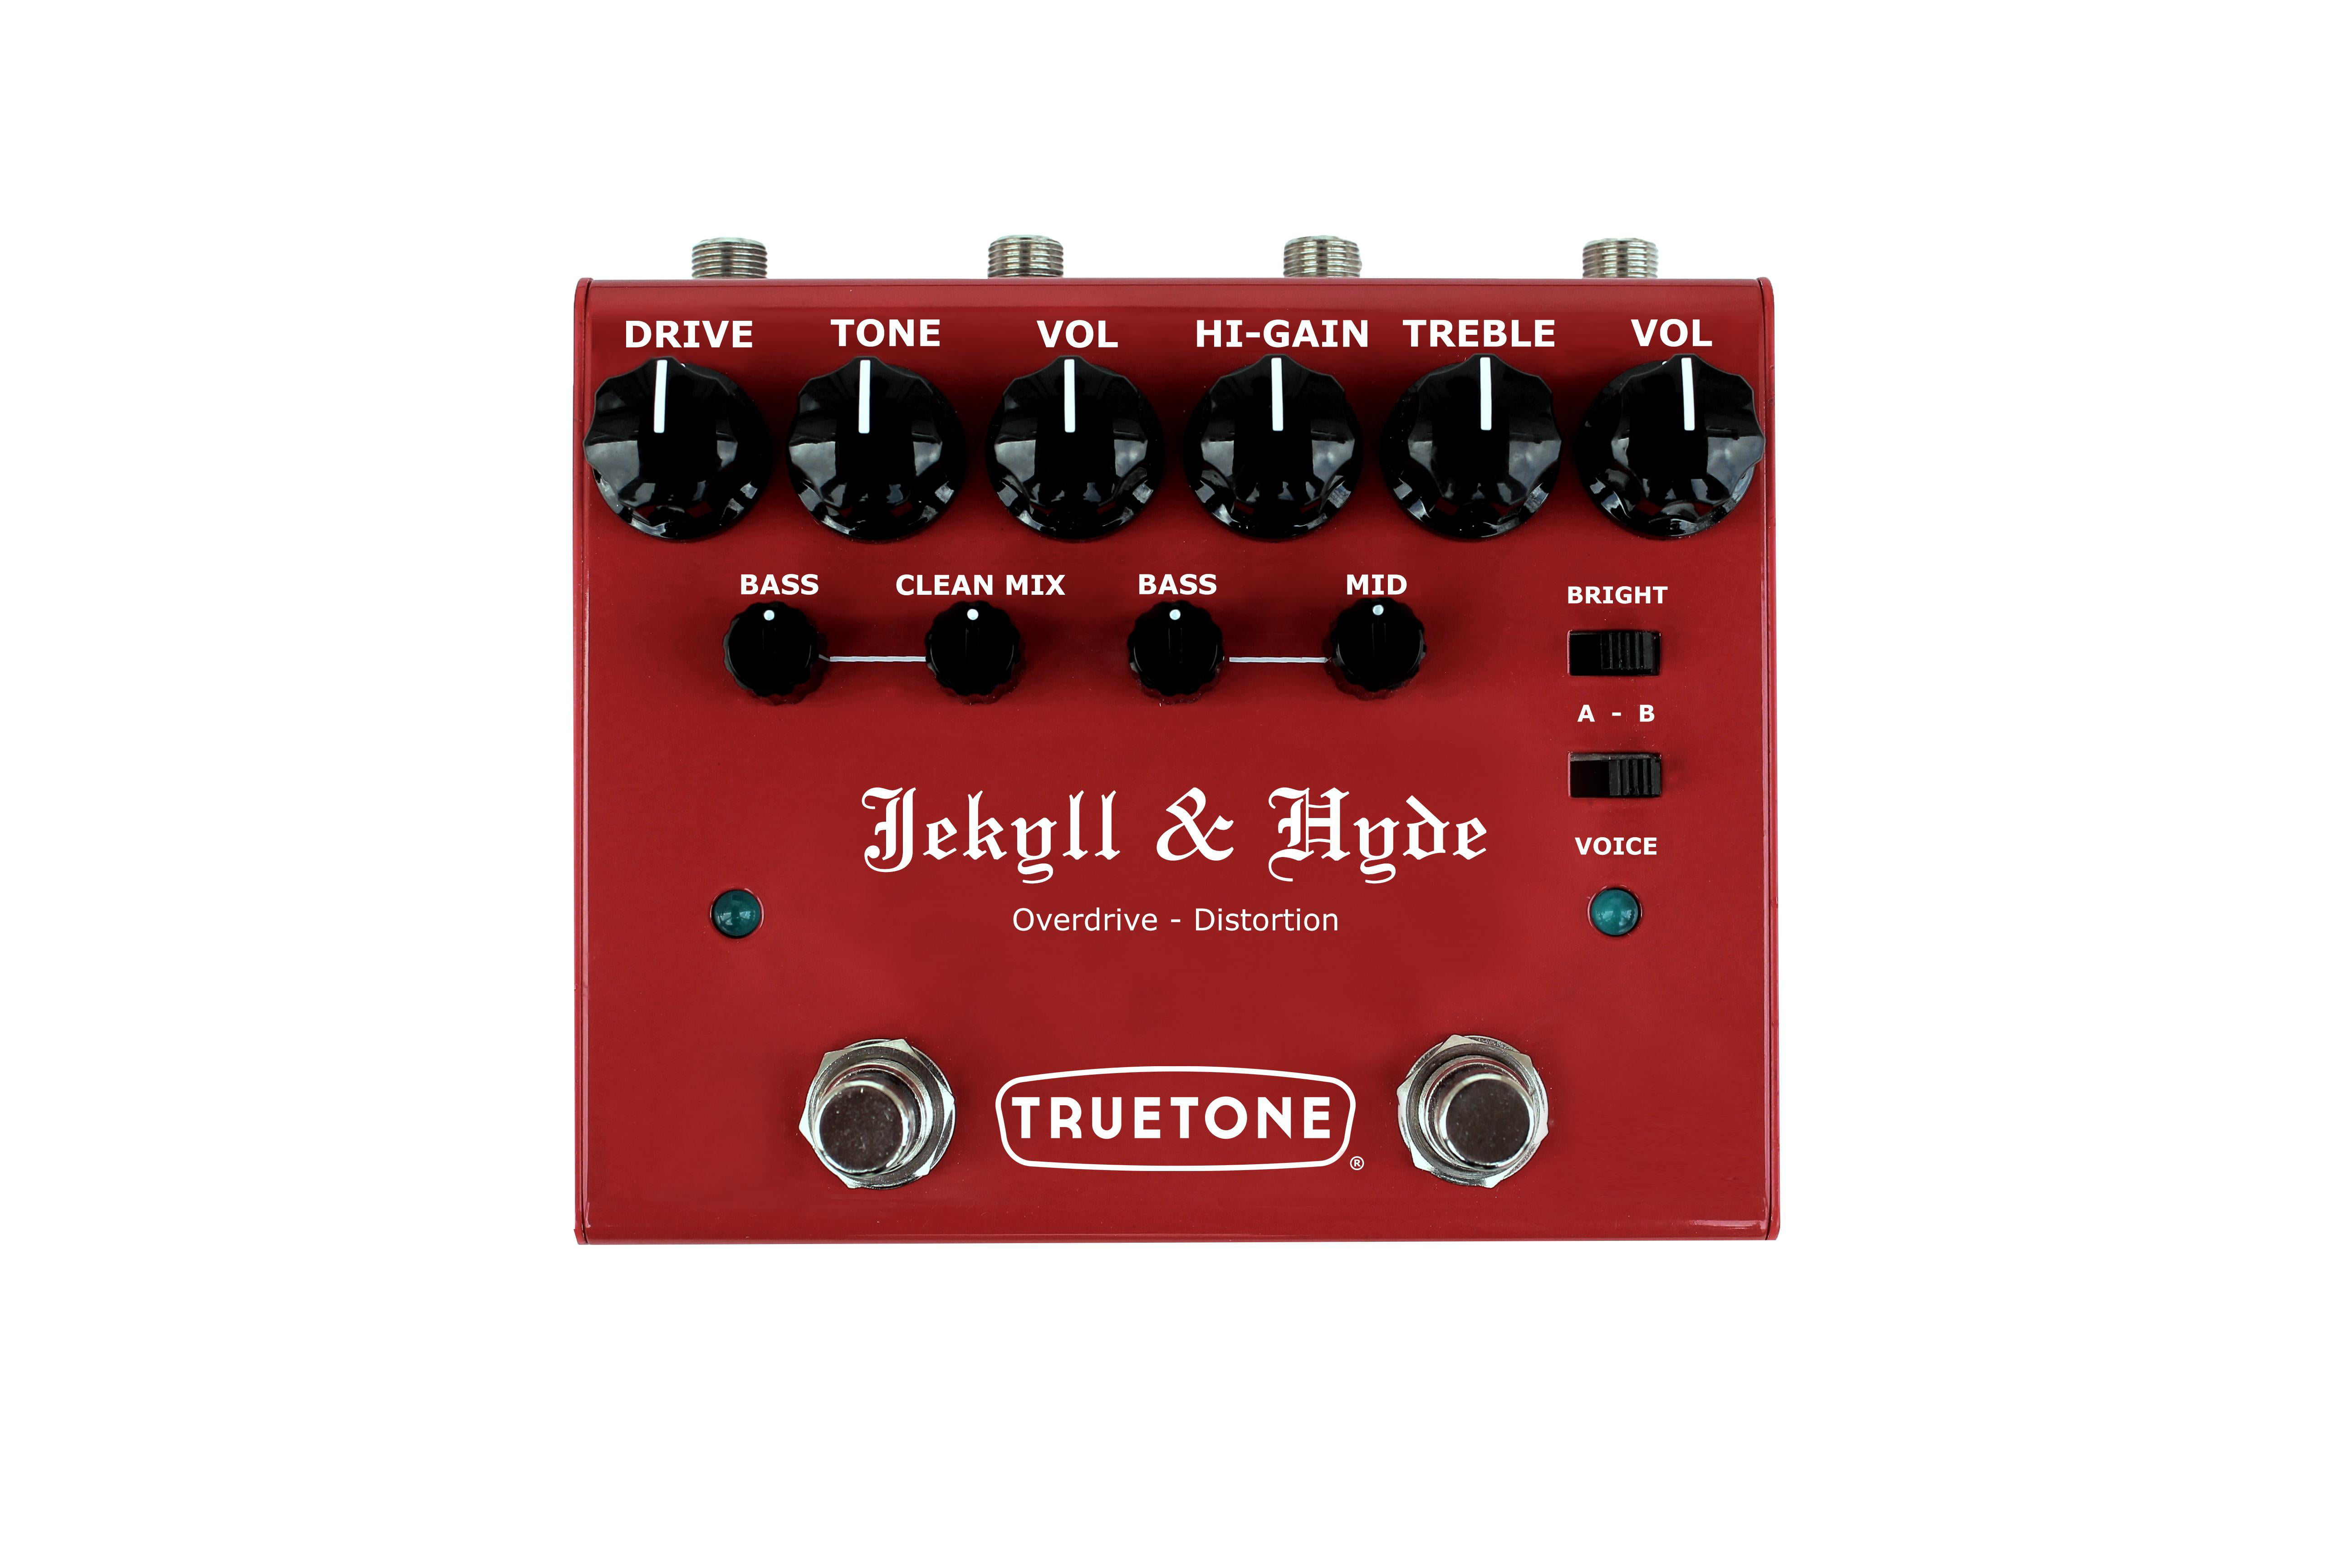 Truetone V3 Jekyll & Hyde Overdrive & Distortion Guitar Effects Pedal